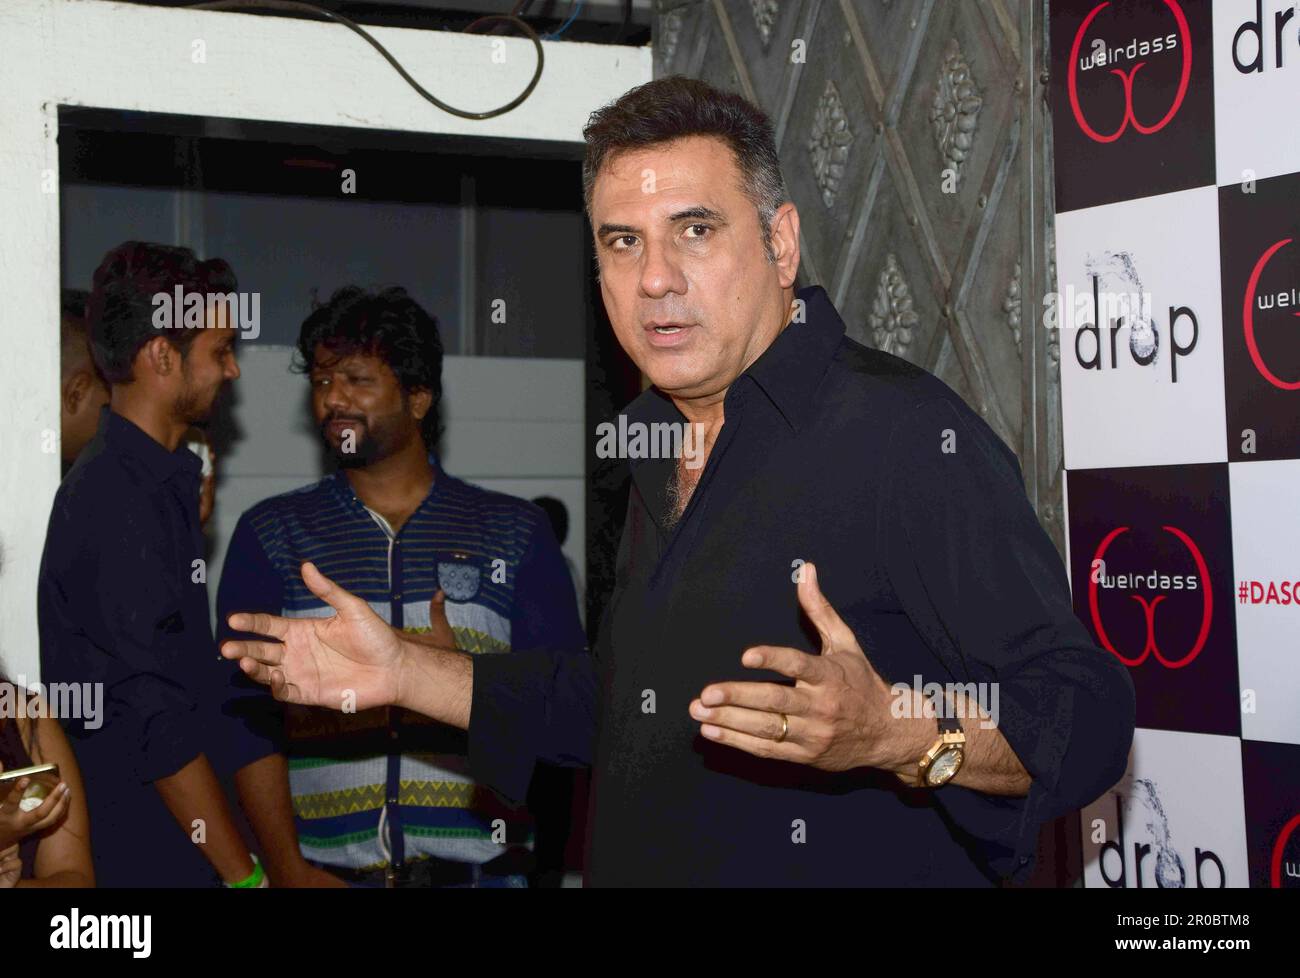 Boman Irani, Indian actor, Weirdass Comedy event, Mumbai, India, 2 May 2017 Stock Photo